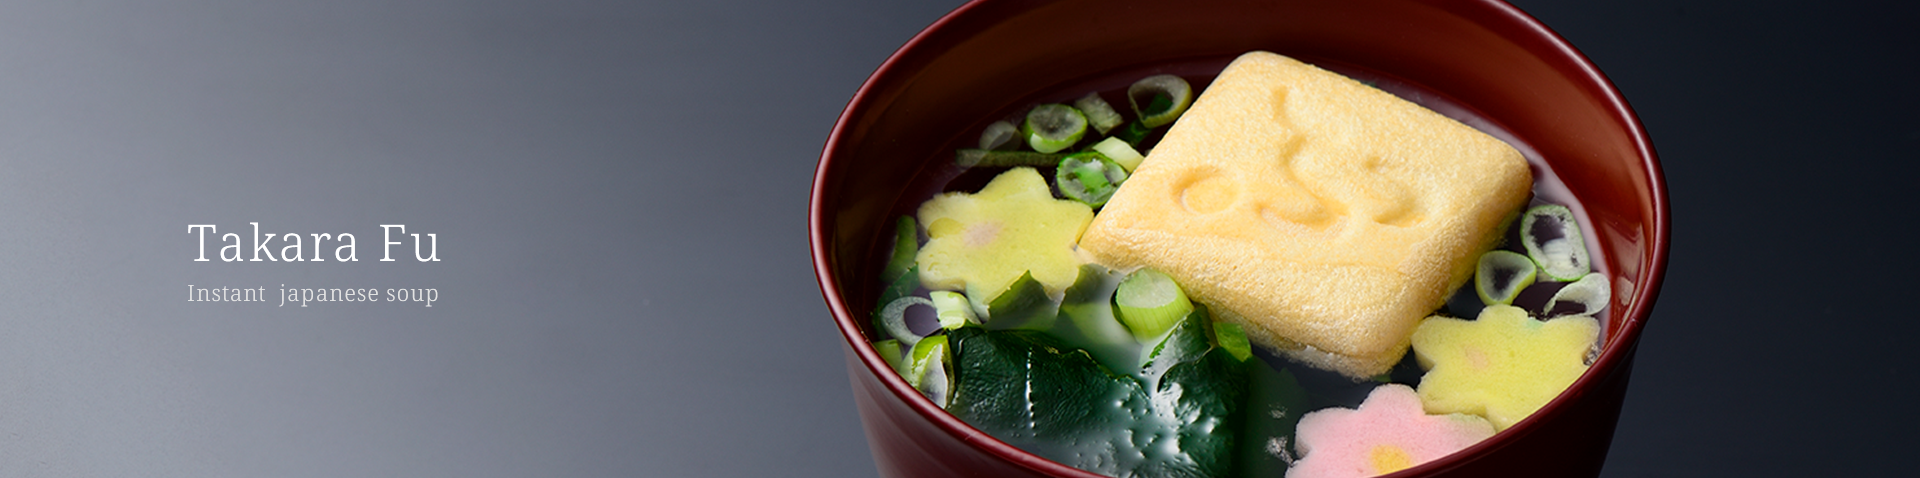 Takara Fu Instant Japanese Soup